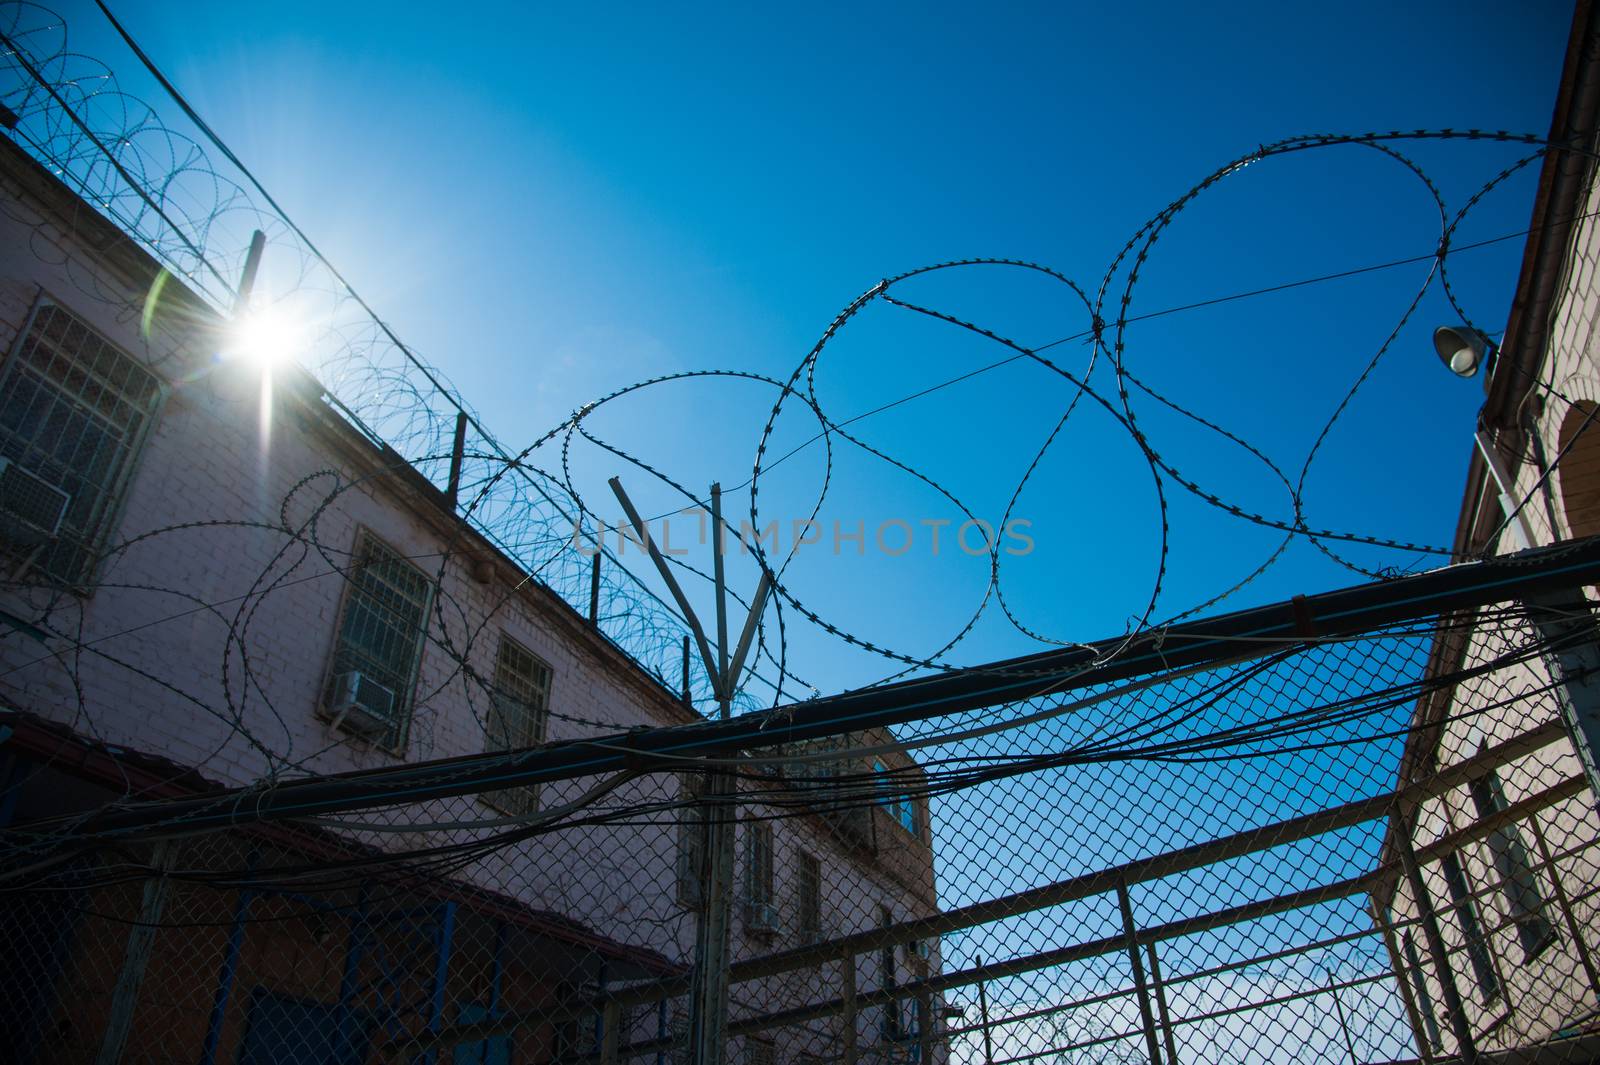 Barbed fence around prison walls by grigorenko